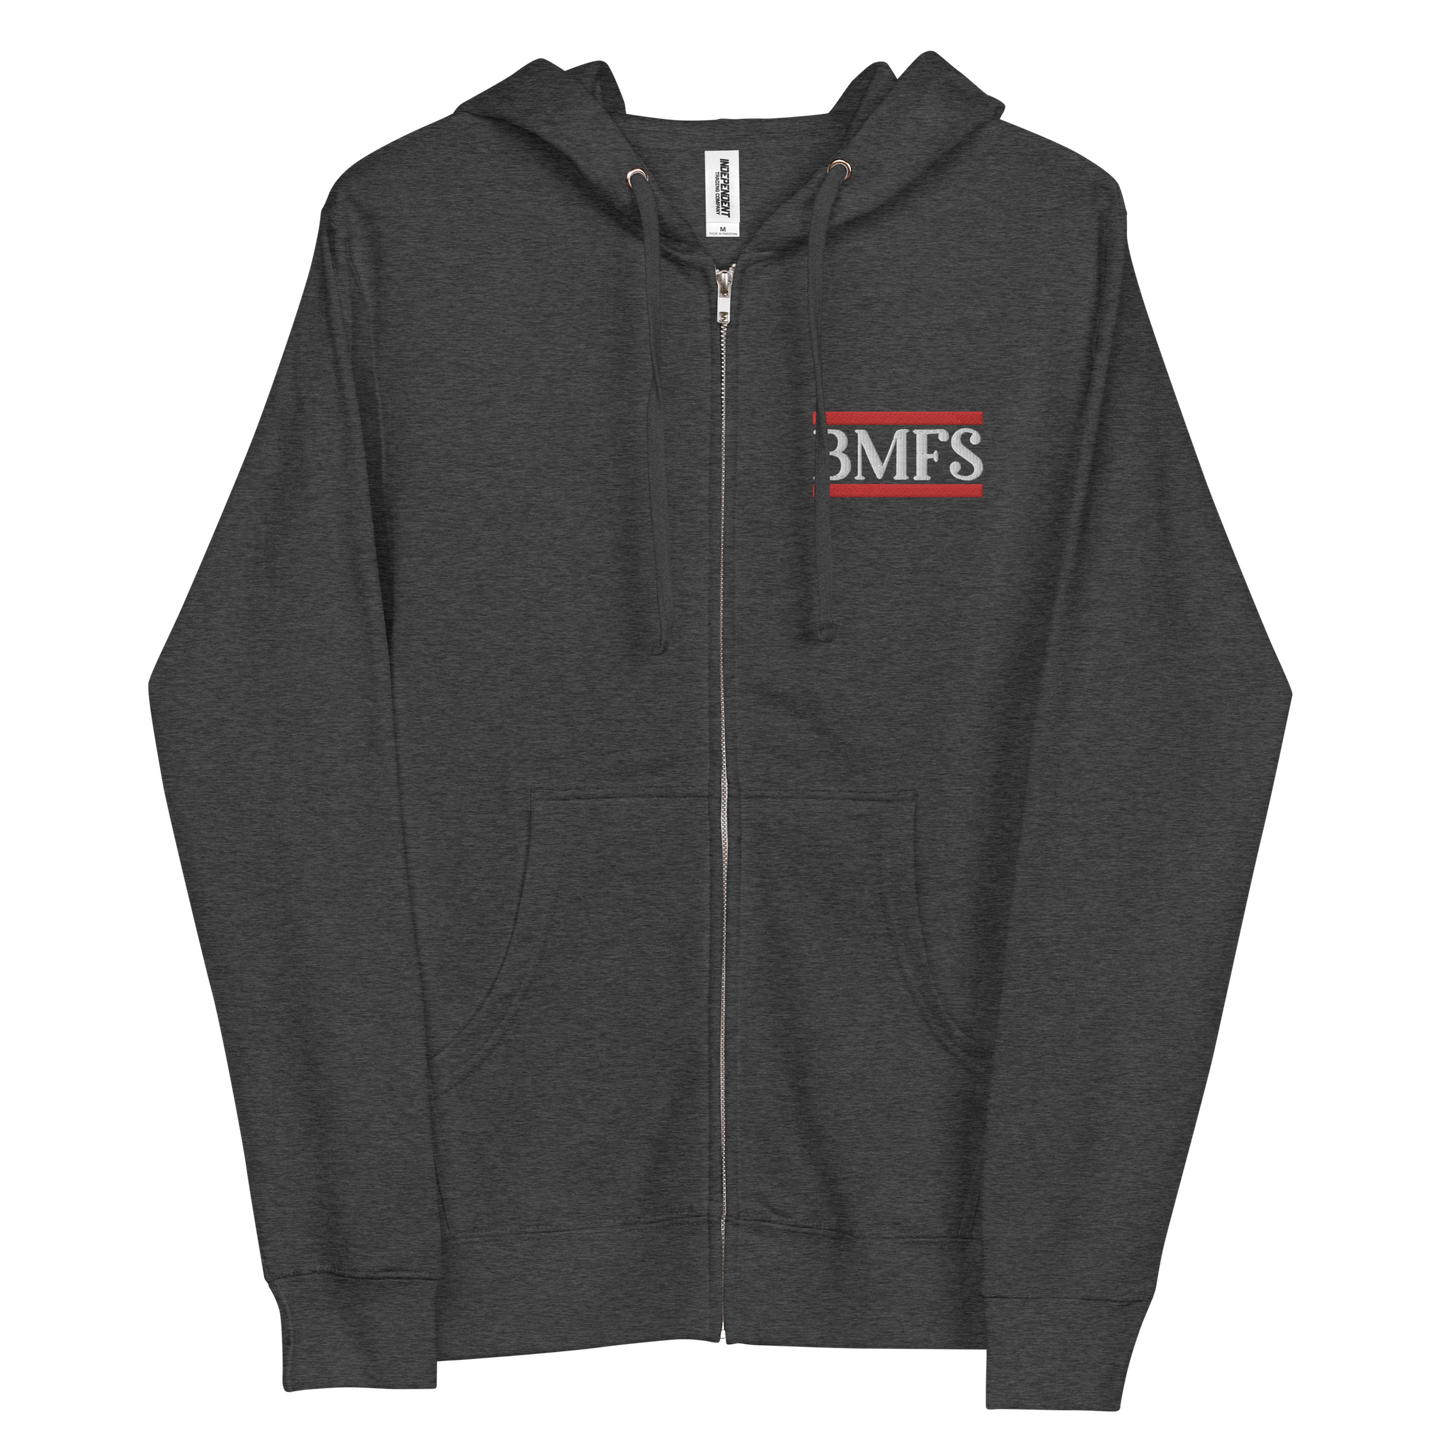 BMFS Embroidery Full Zip Hoodie | Unisex fleece | BMFS 33